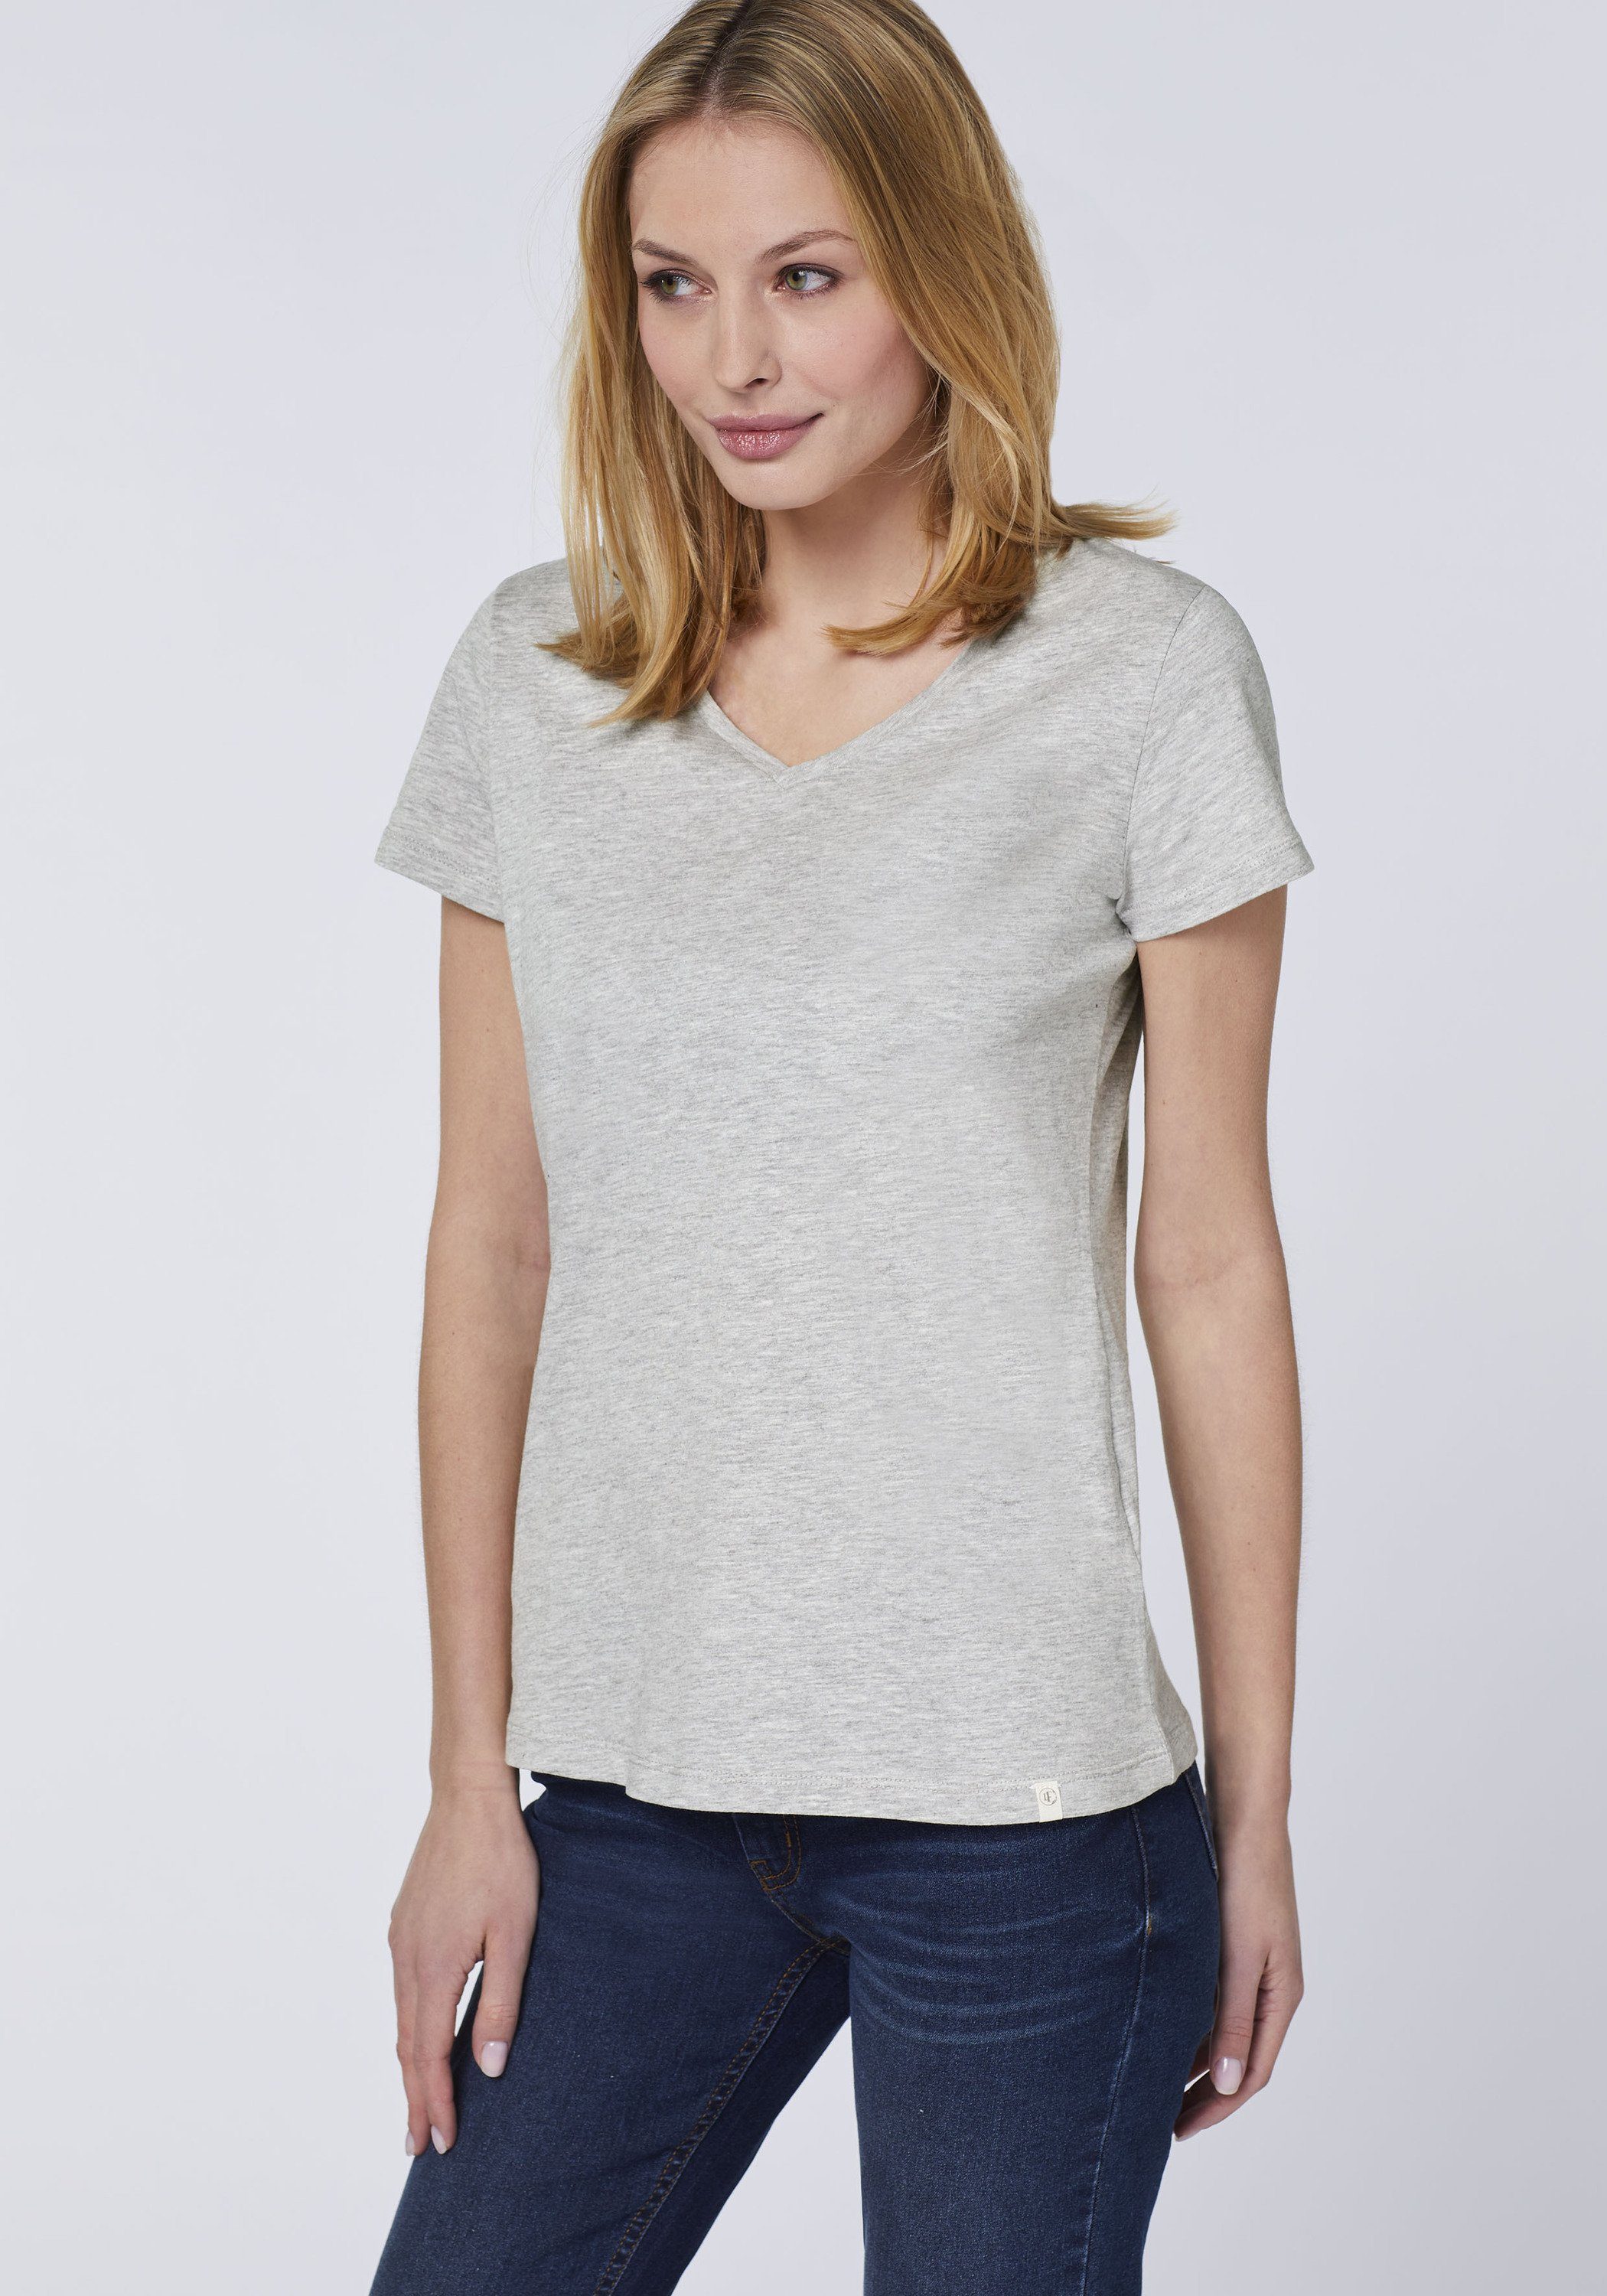 72 T-Shirt Detto Grey V-Neck-Design im Fatto femininen Light